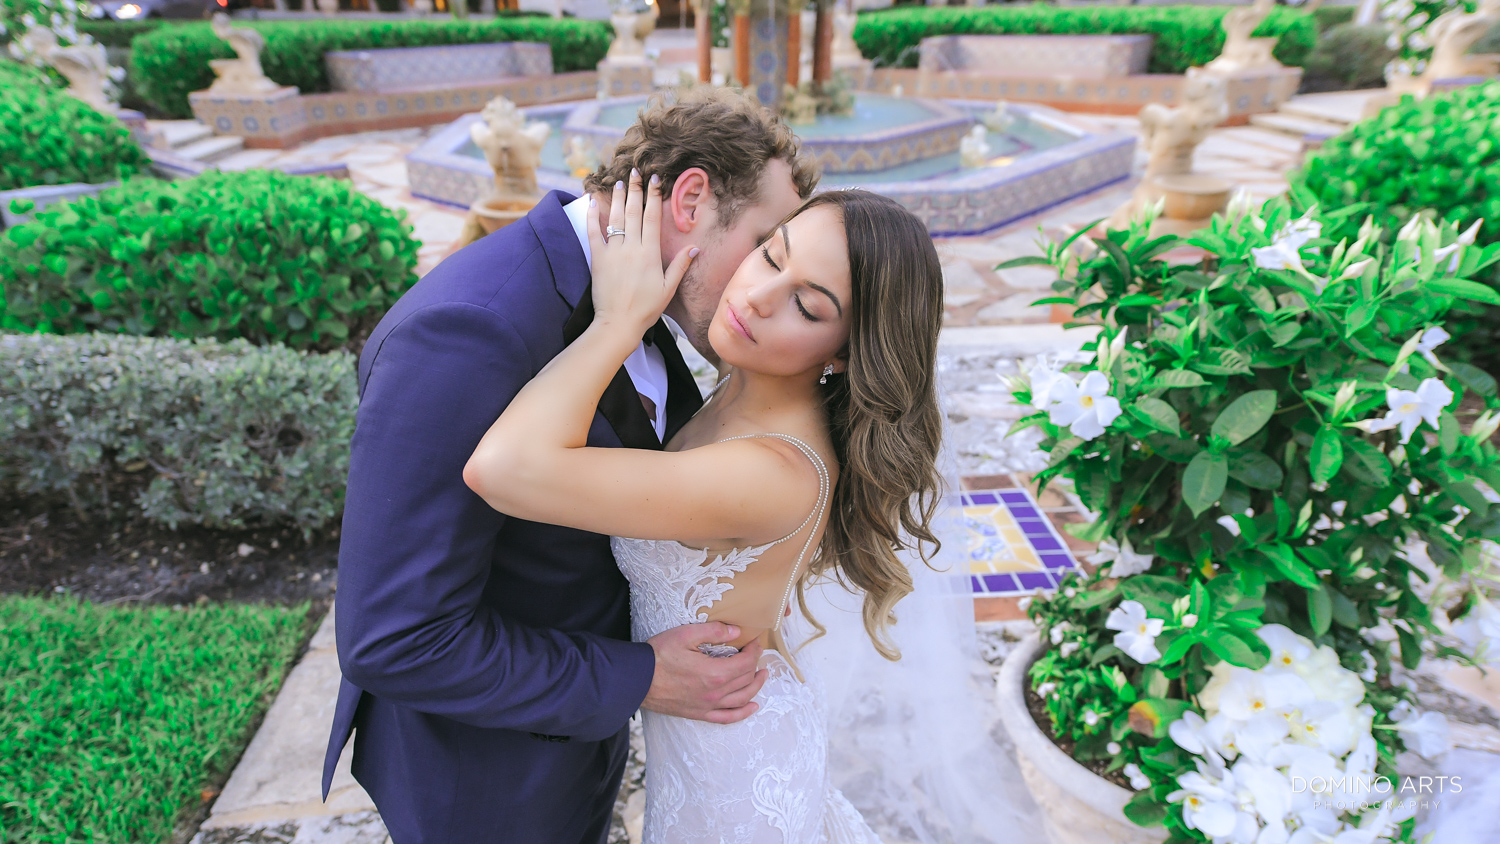 Romantic bride and groom picture at Boca Raton Resort